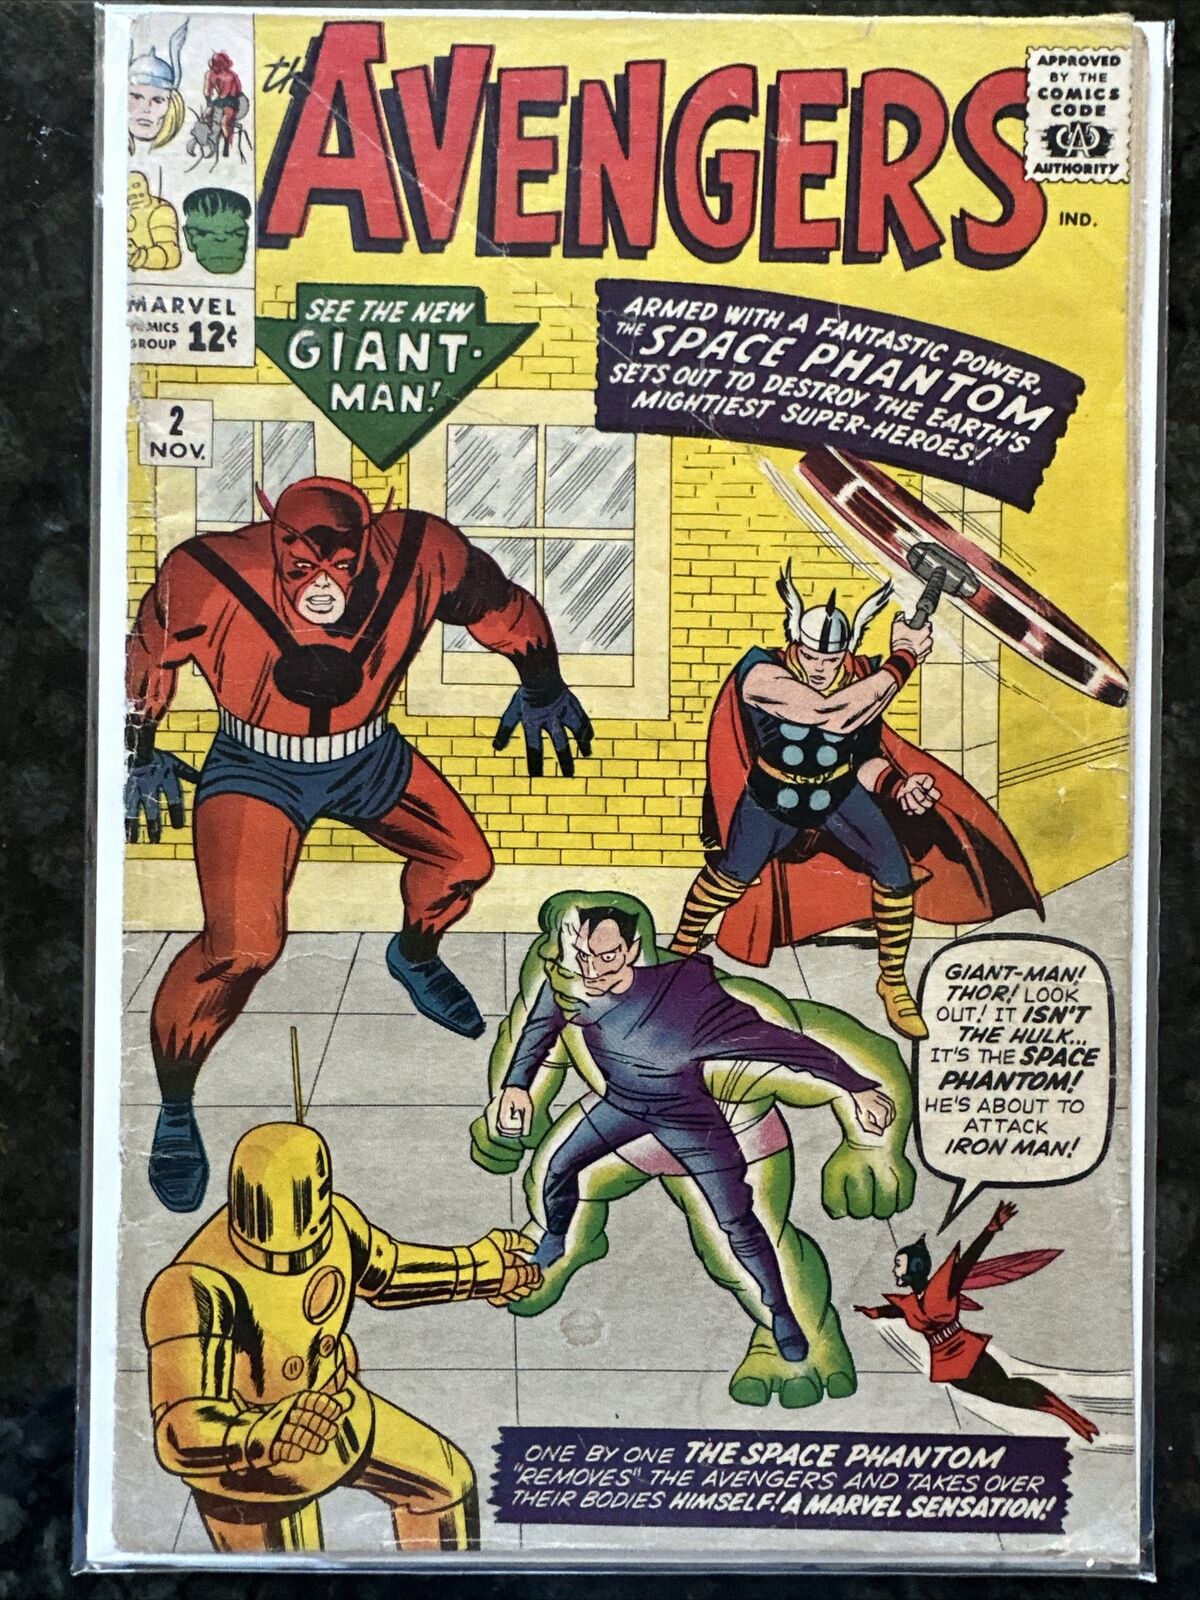 Avengers #2 1963 Key Marvel Comic Book 2nd Appearance Of The Avengers